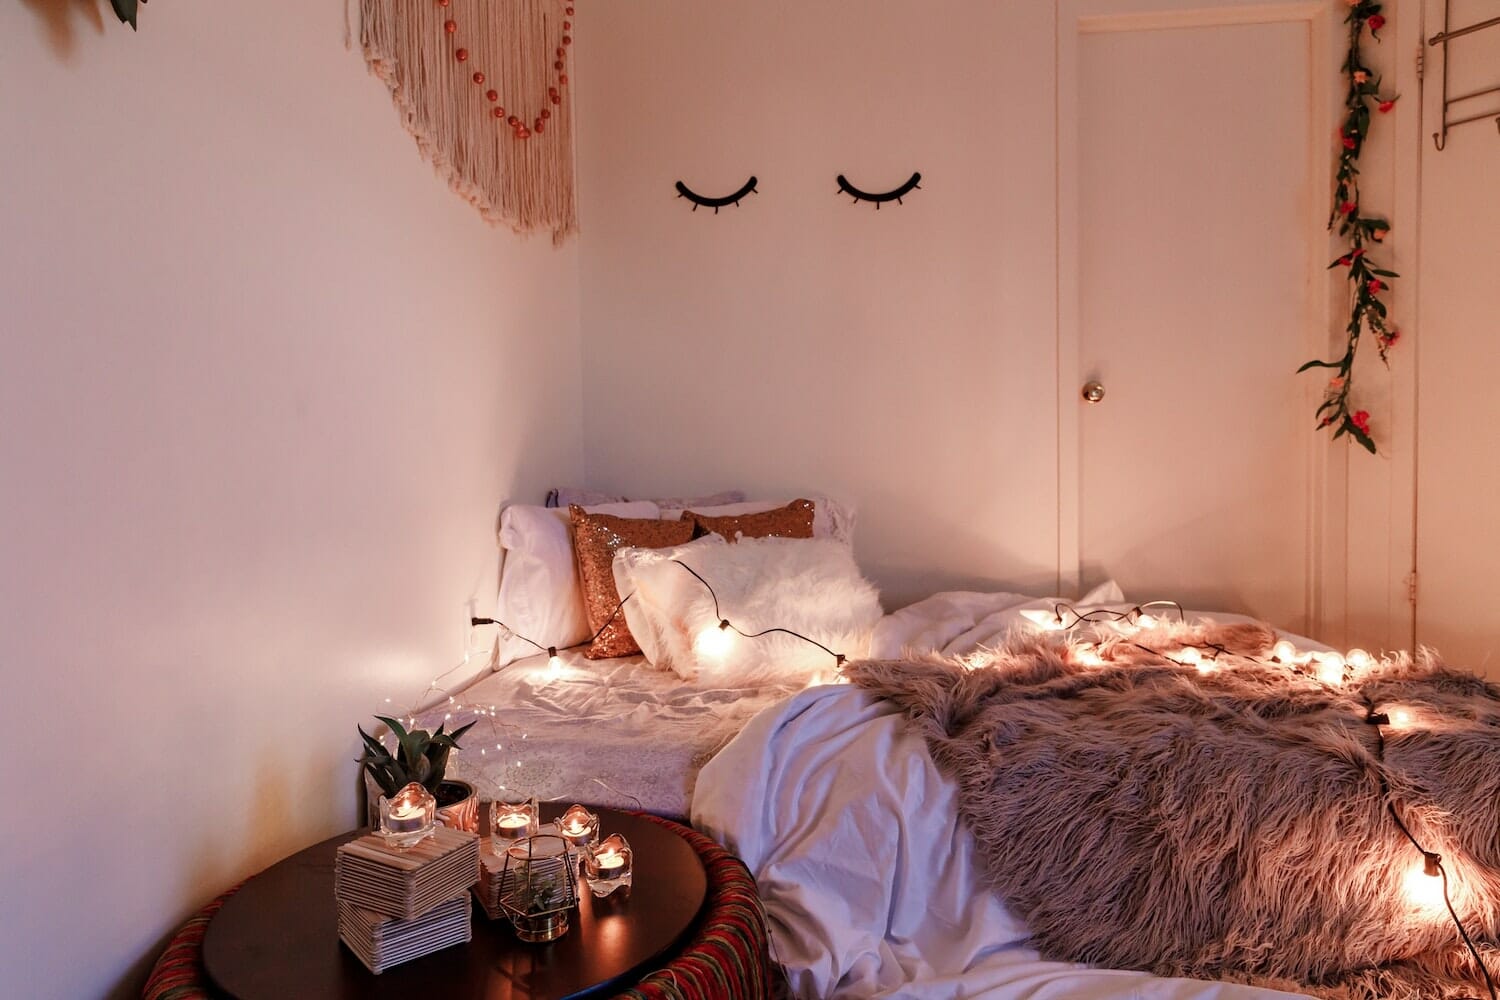 Pintrest Diy Fall Decor For A Bedroom